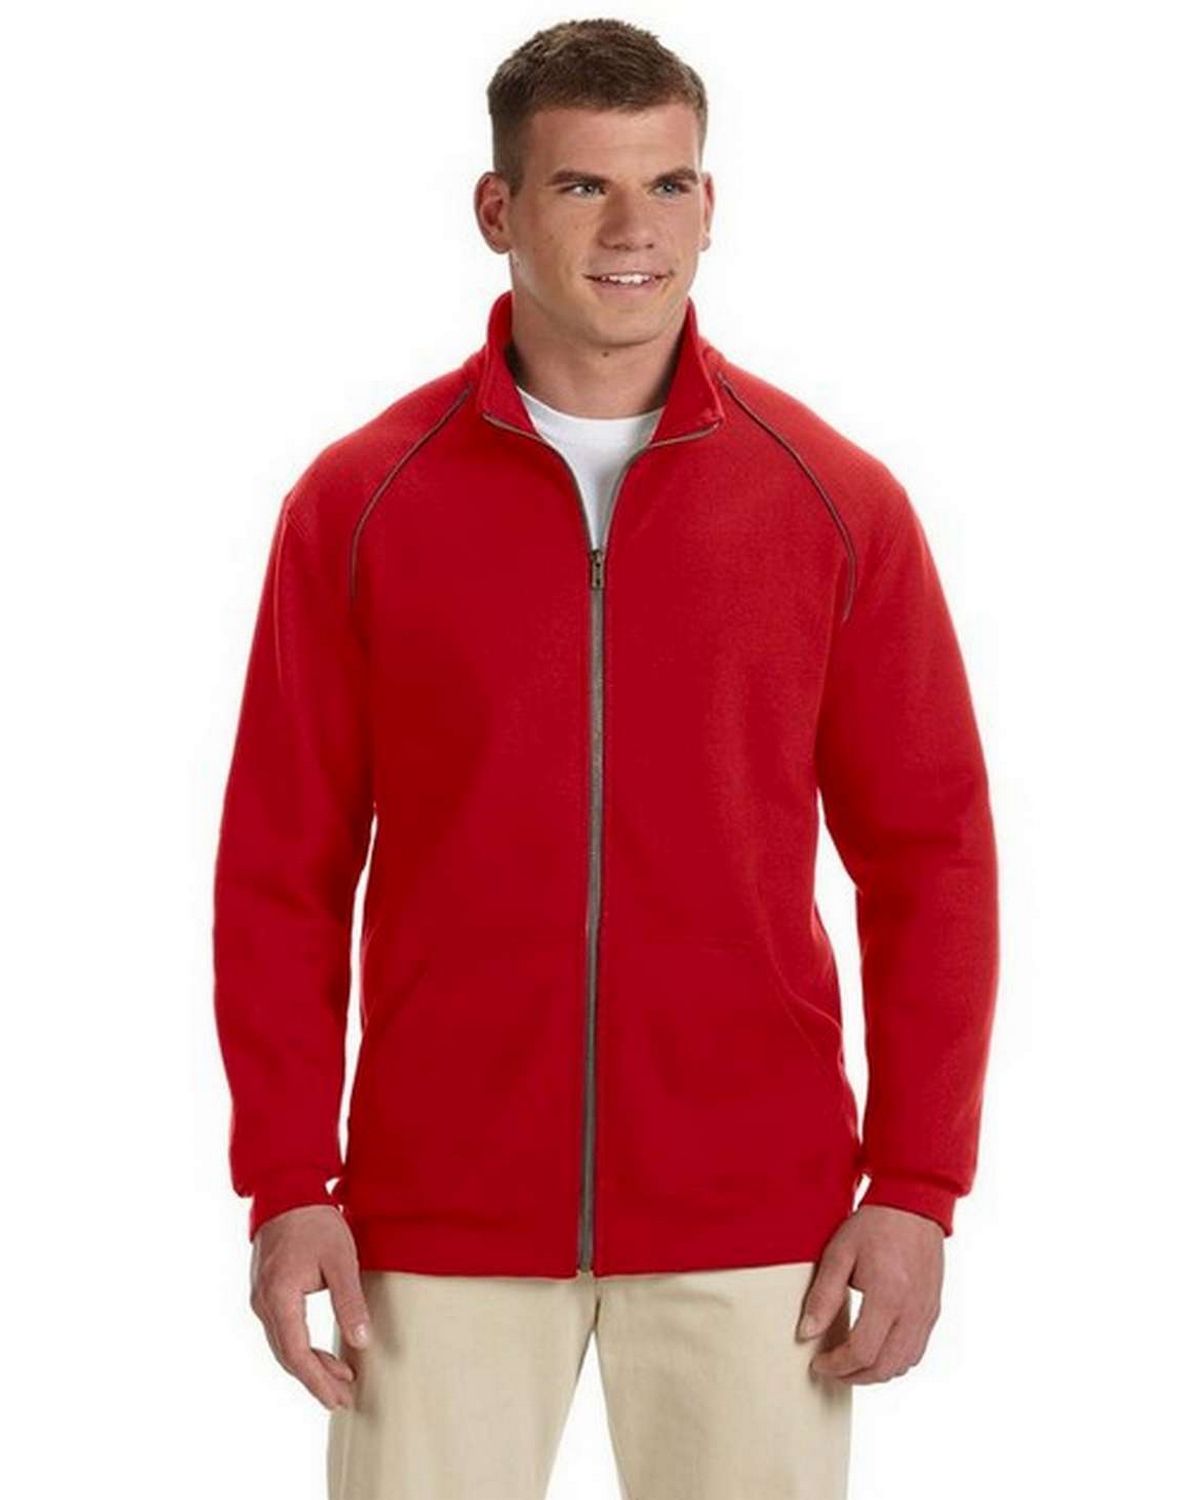 Gildan G929 Premium Cotton™ Ringspun Fleece Full Zip Jacket